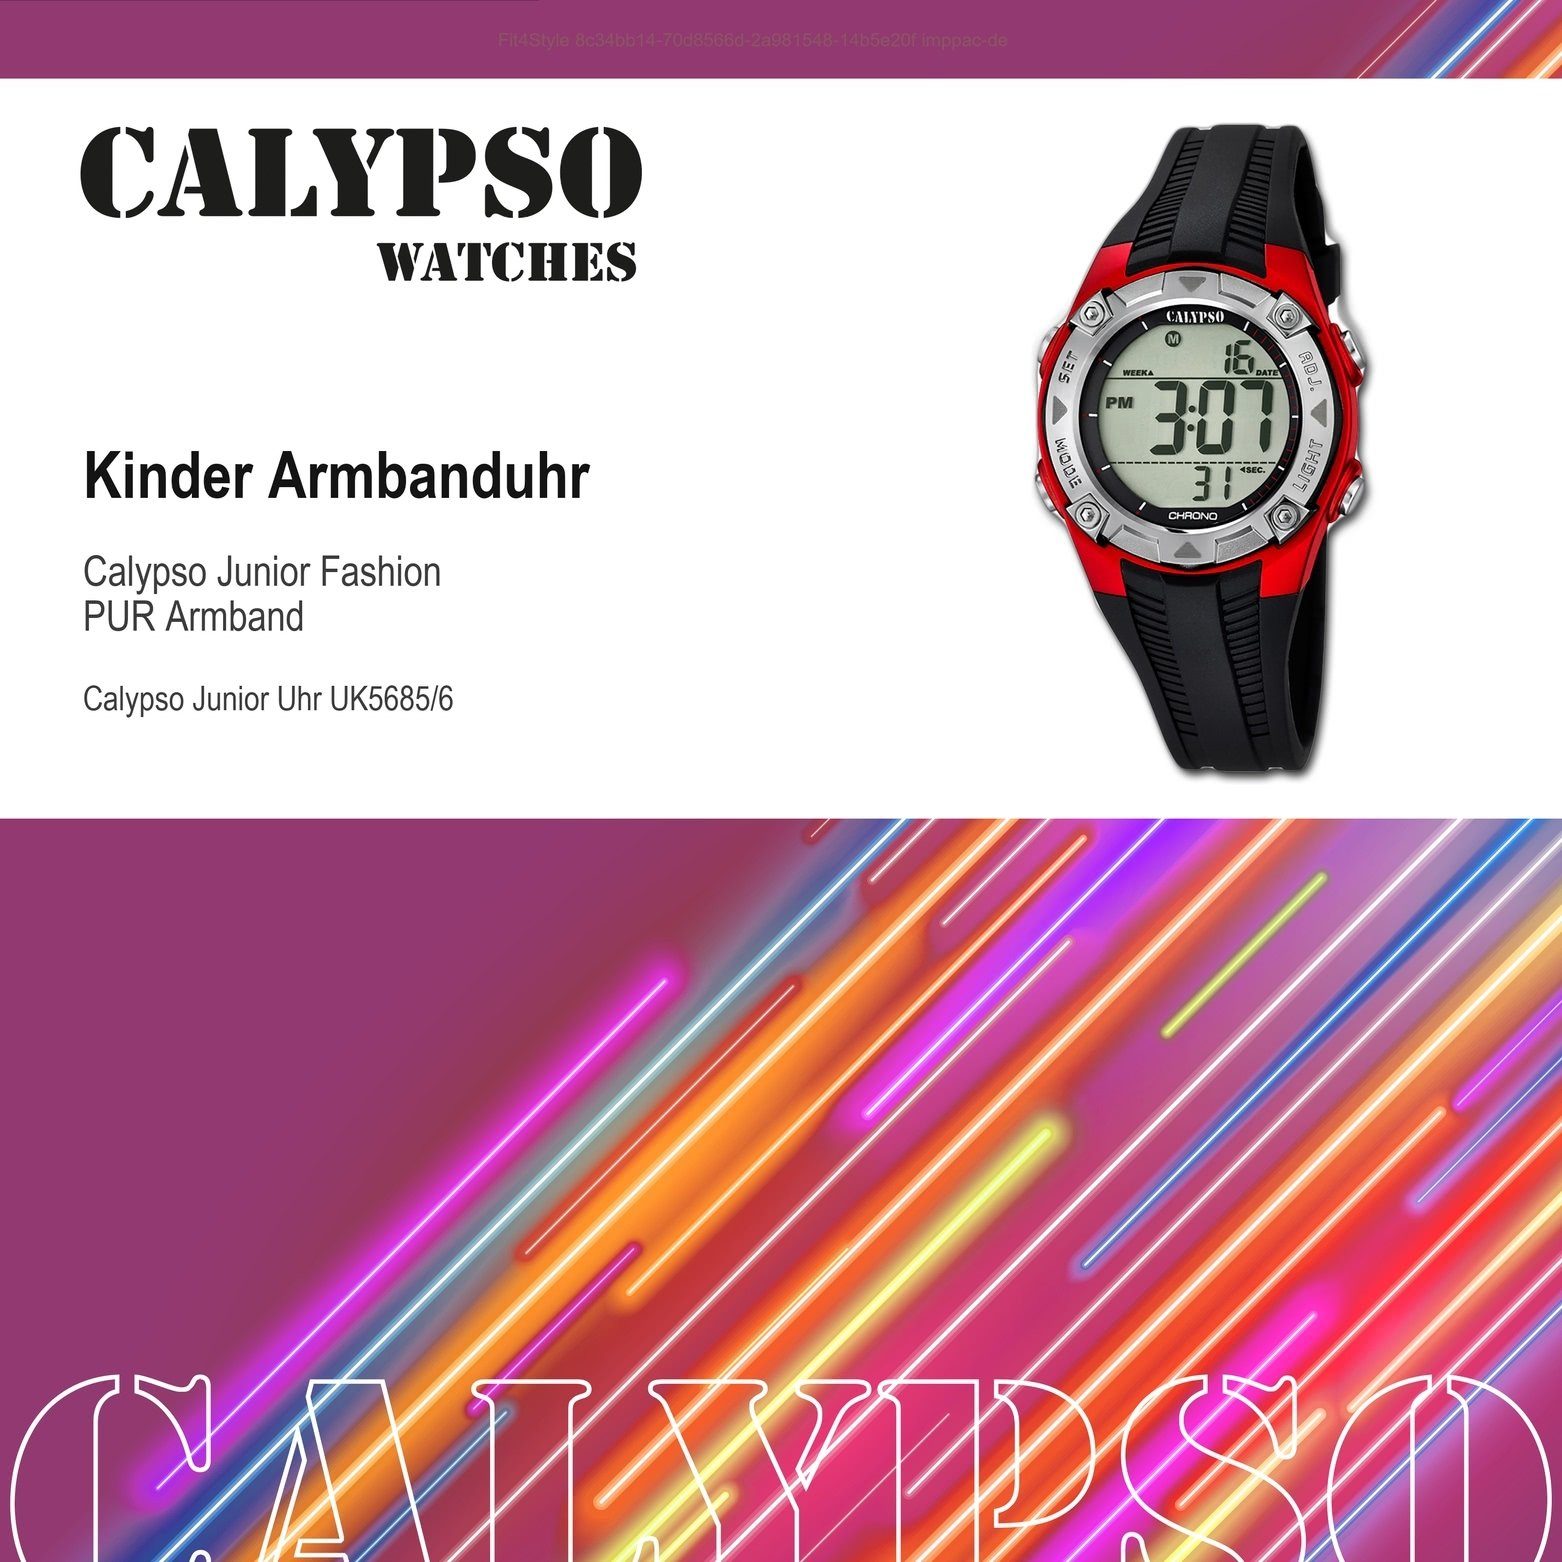 Fashion Uhr Digitaluhr K5685/6 Calypso Kinder schwarz, Armbanduhr Kinder rund, WATCHES PURarmband CALYPSO Kunststoffband,